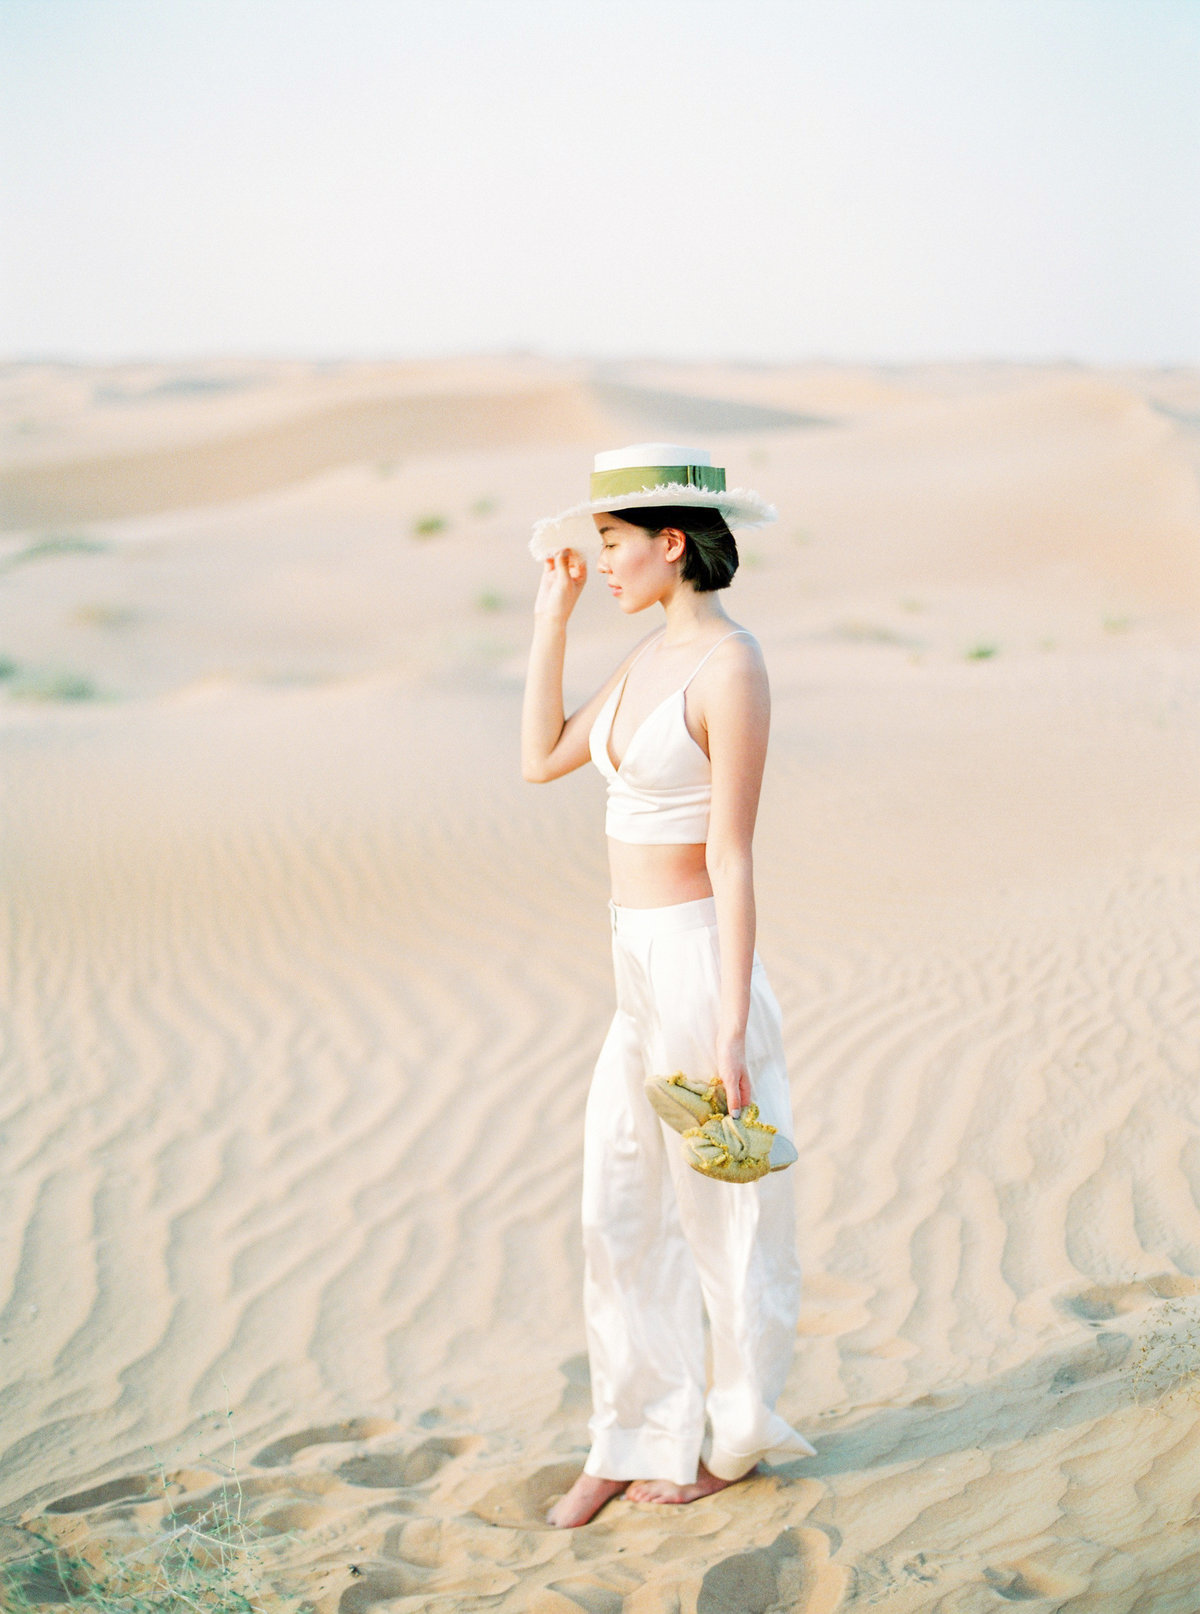 Maria_Sundin_Photography_Desert_Couple_Dubai_Maggie-72